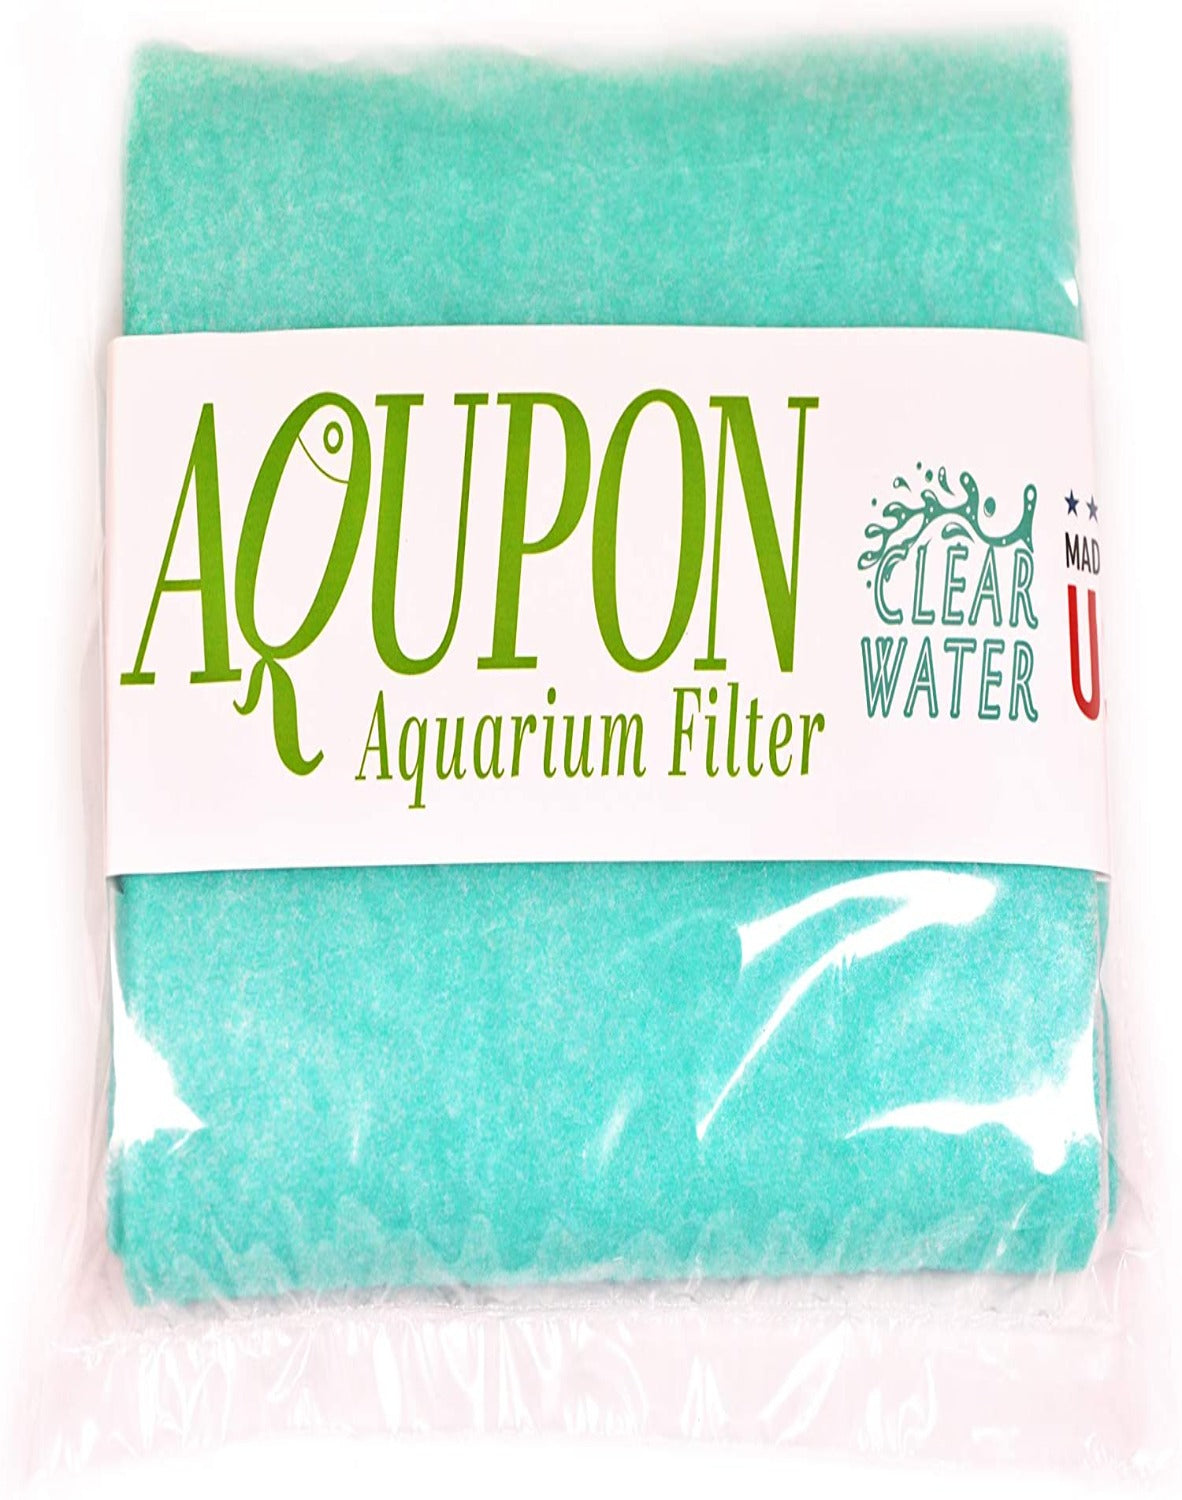 AQUPON Aquarium Polishing Filter Pad 50 Micron - Ultimate Media Pads - Cut to Fit 24" by 36" - for Fish Tanks, Aquaculture, Hydroponics - USA Manufacturer